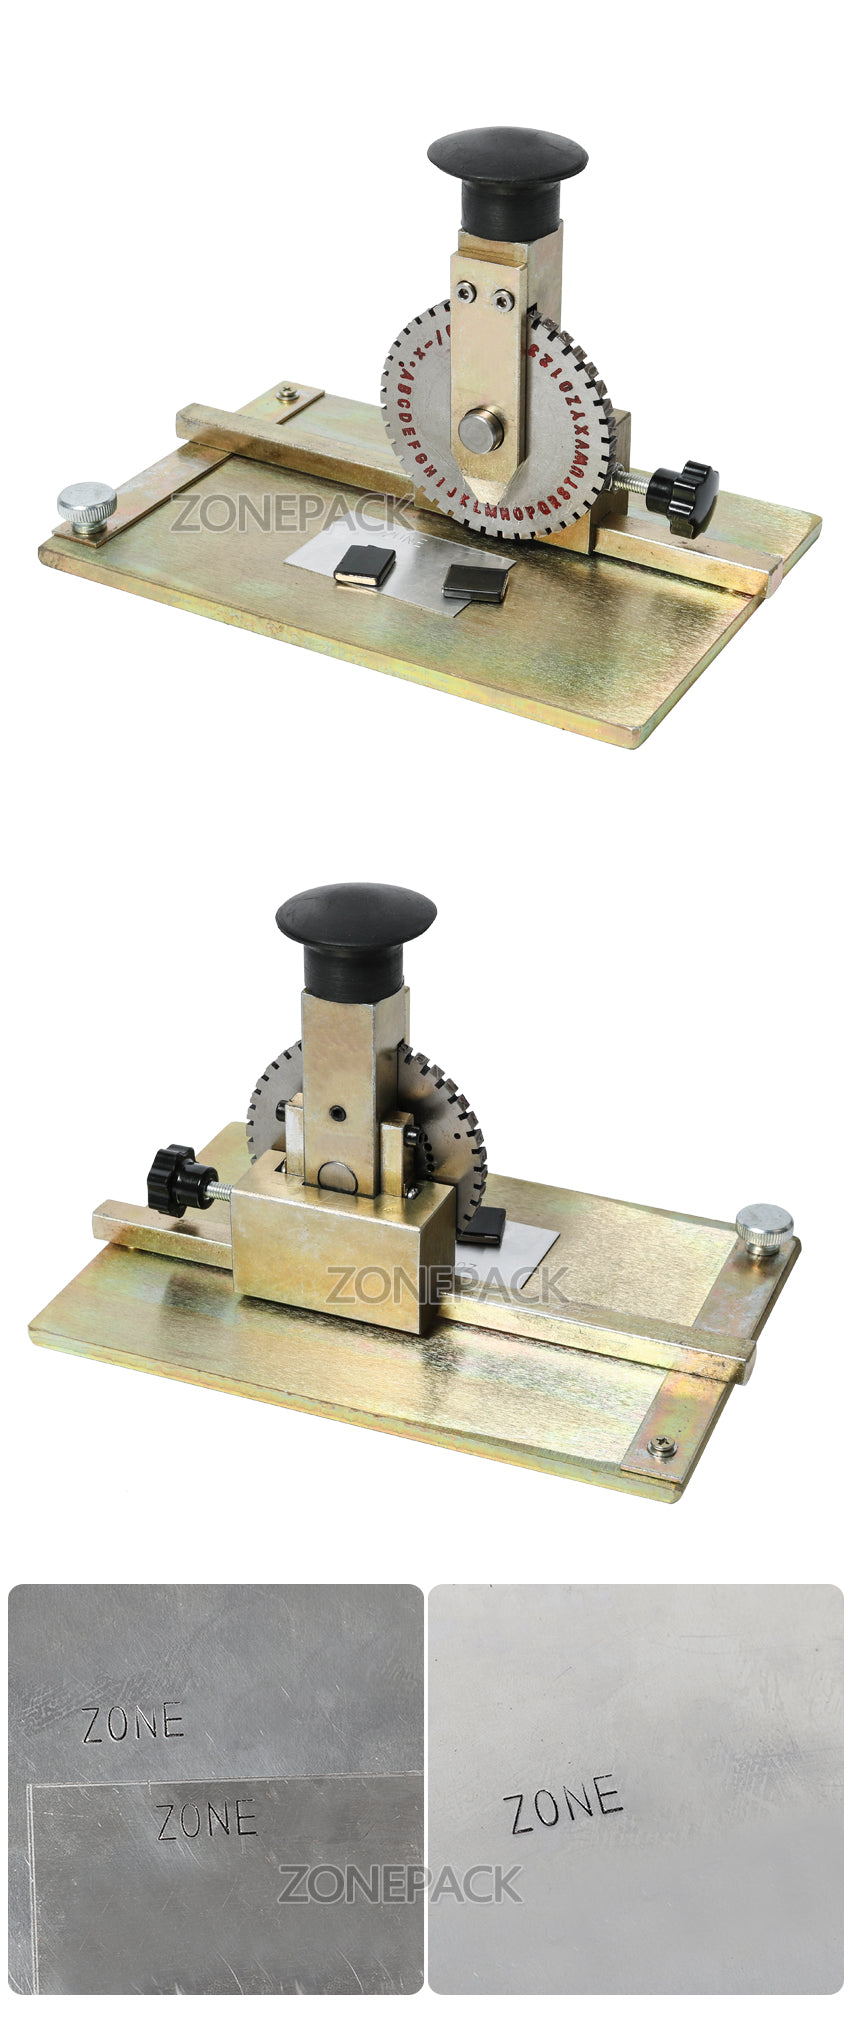 ZONESUN Manual Metal Stamping Marking Machine Deboss Embossing Machine